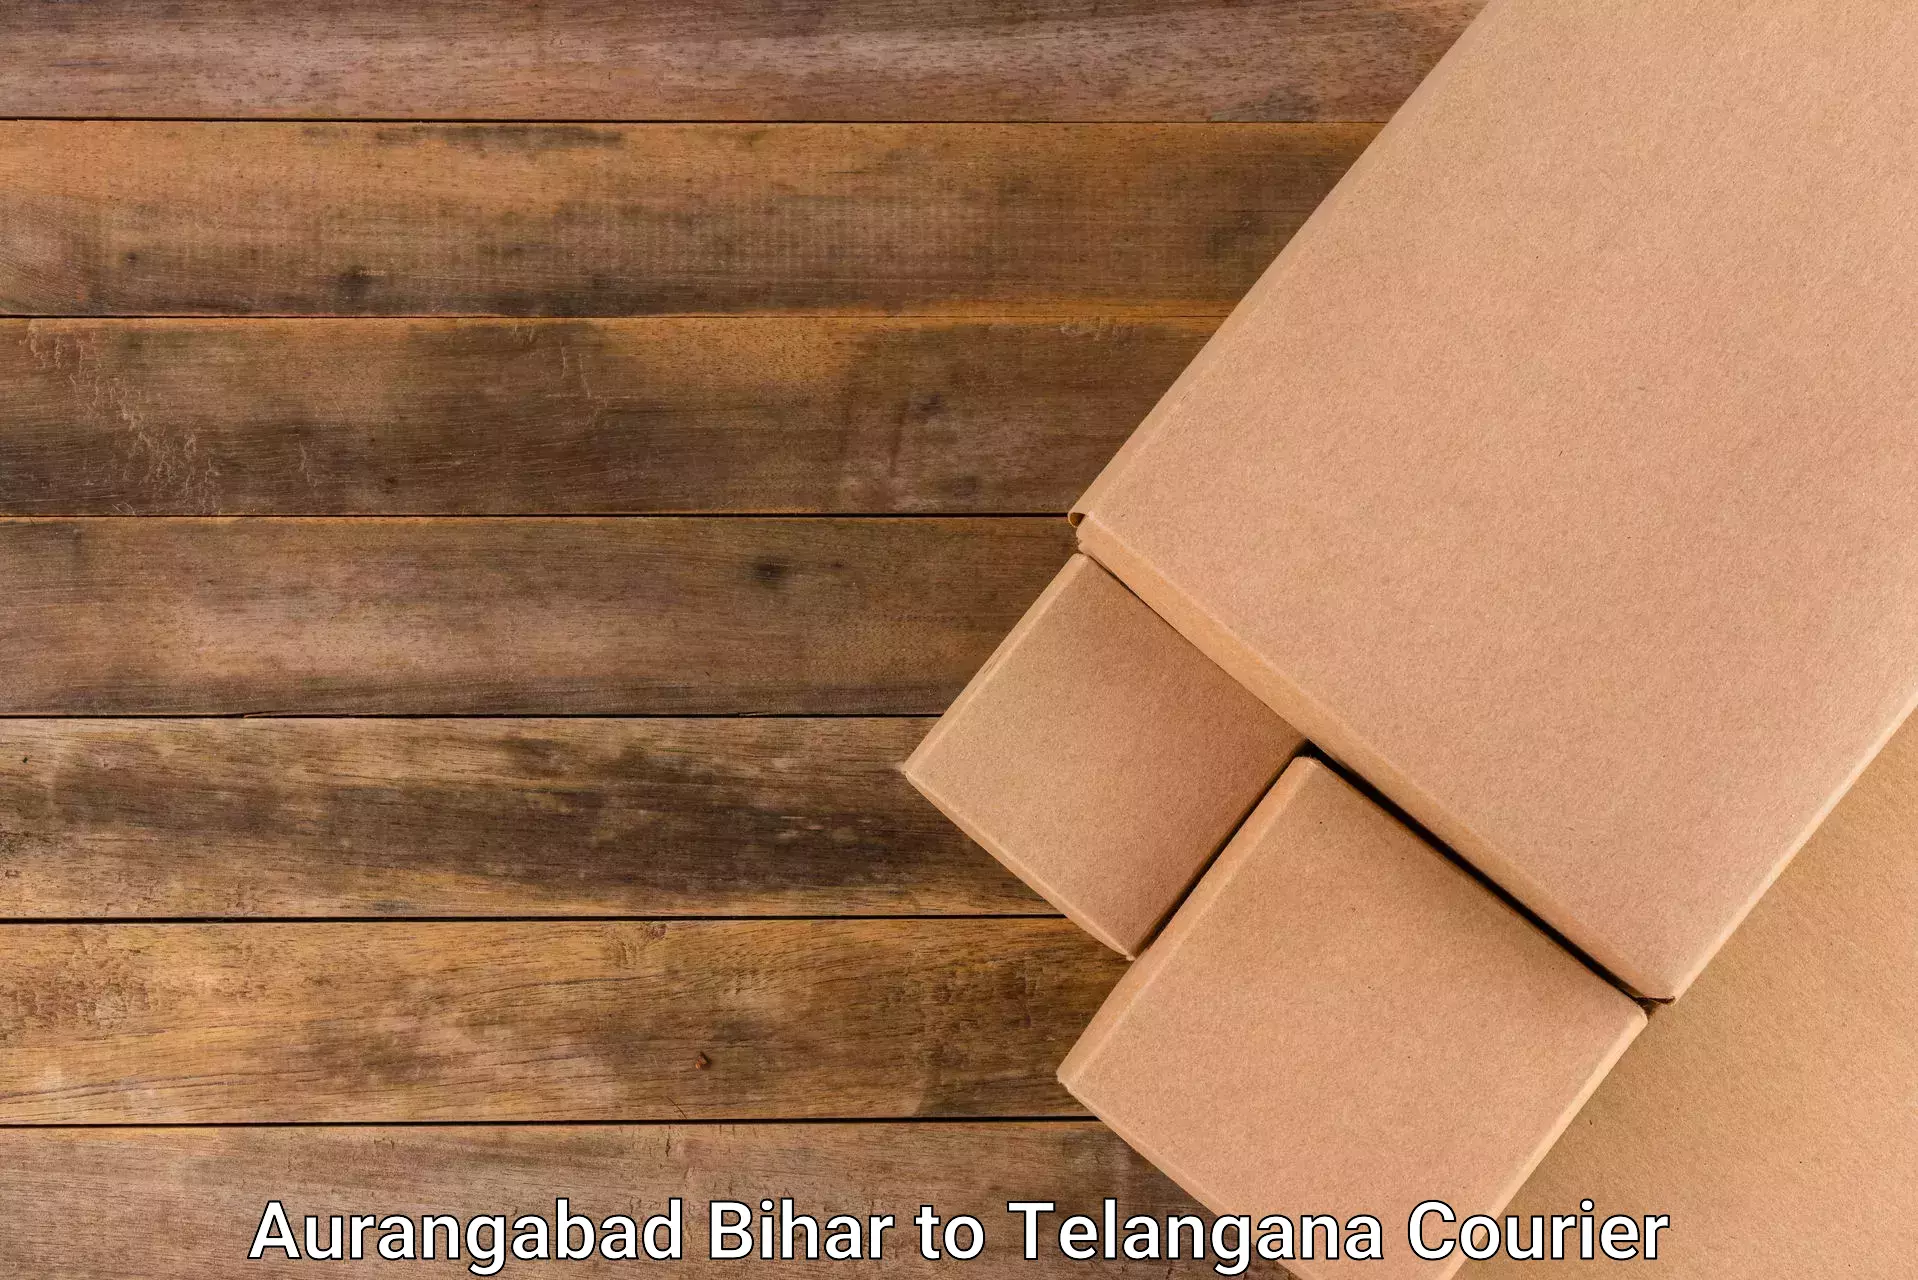 High-efficiency logistics Aurangabad Bihar to Madnoor